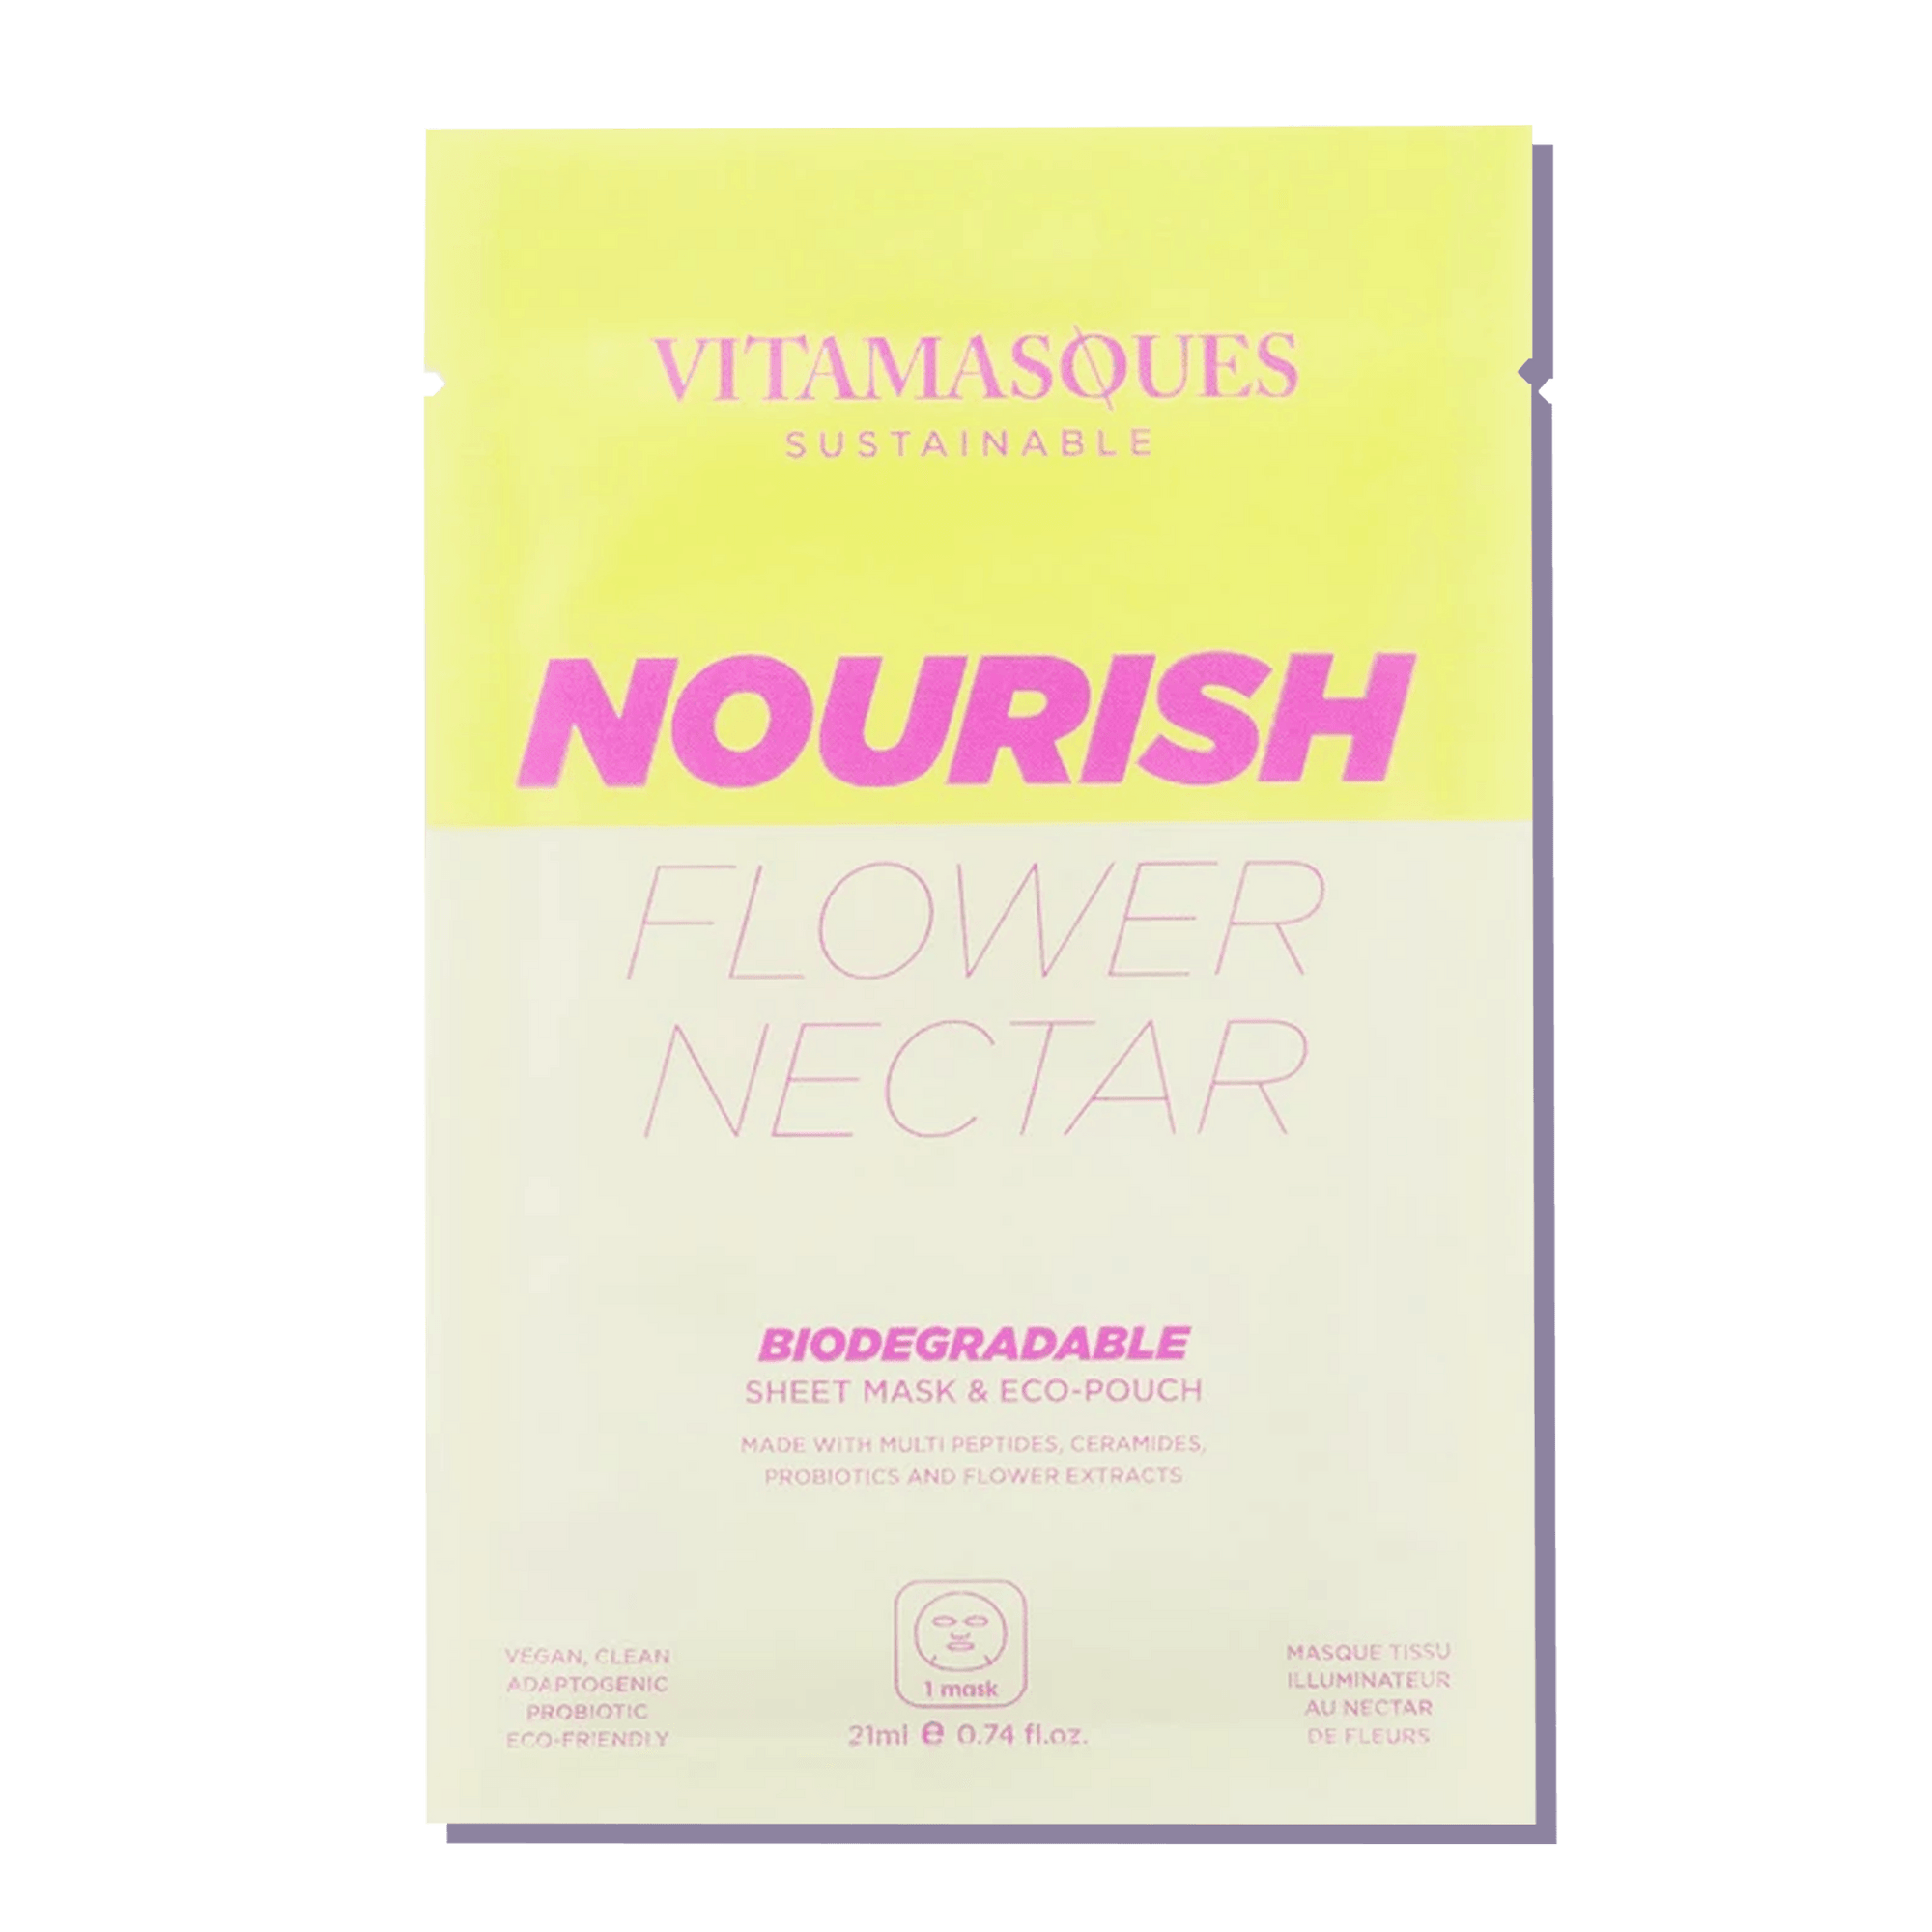 Nourish Flower Nectar Biodegradable Face Sheet Mask - Vitamasques